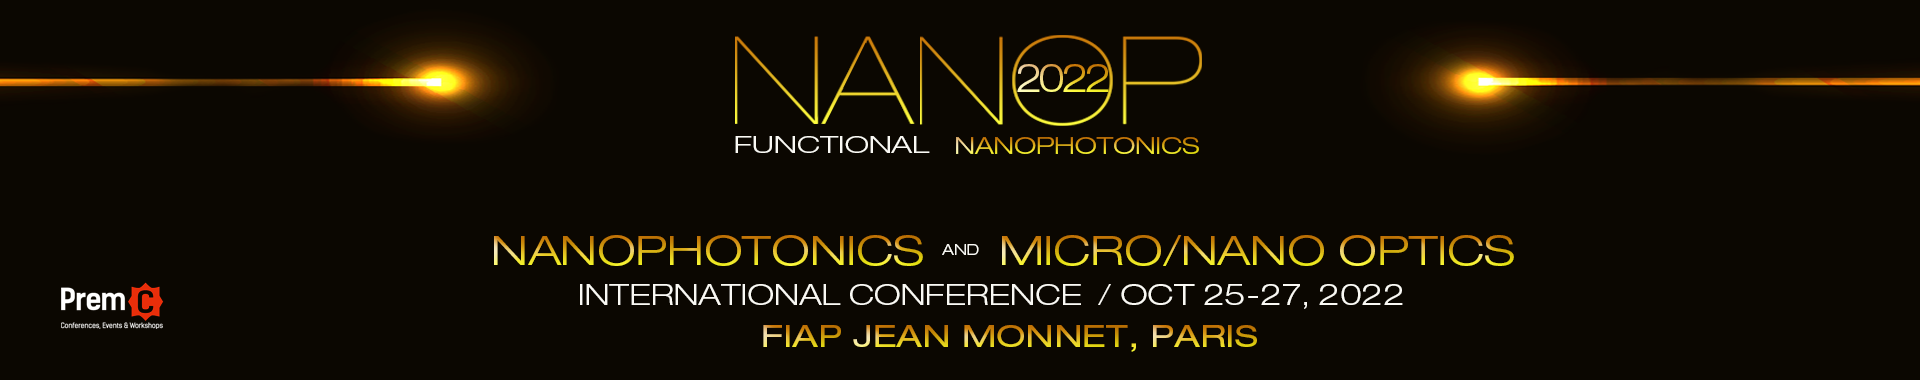 Nanophotonics and Micro/Nano Optics International Conference banner